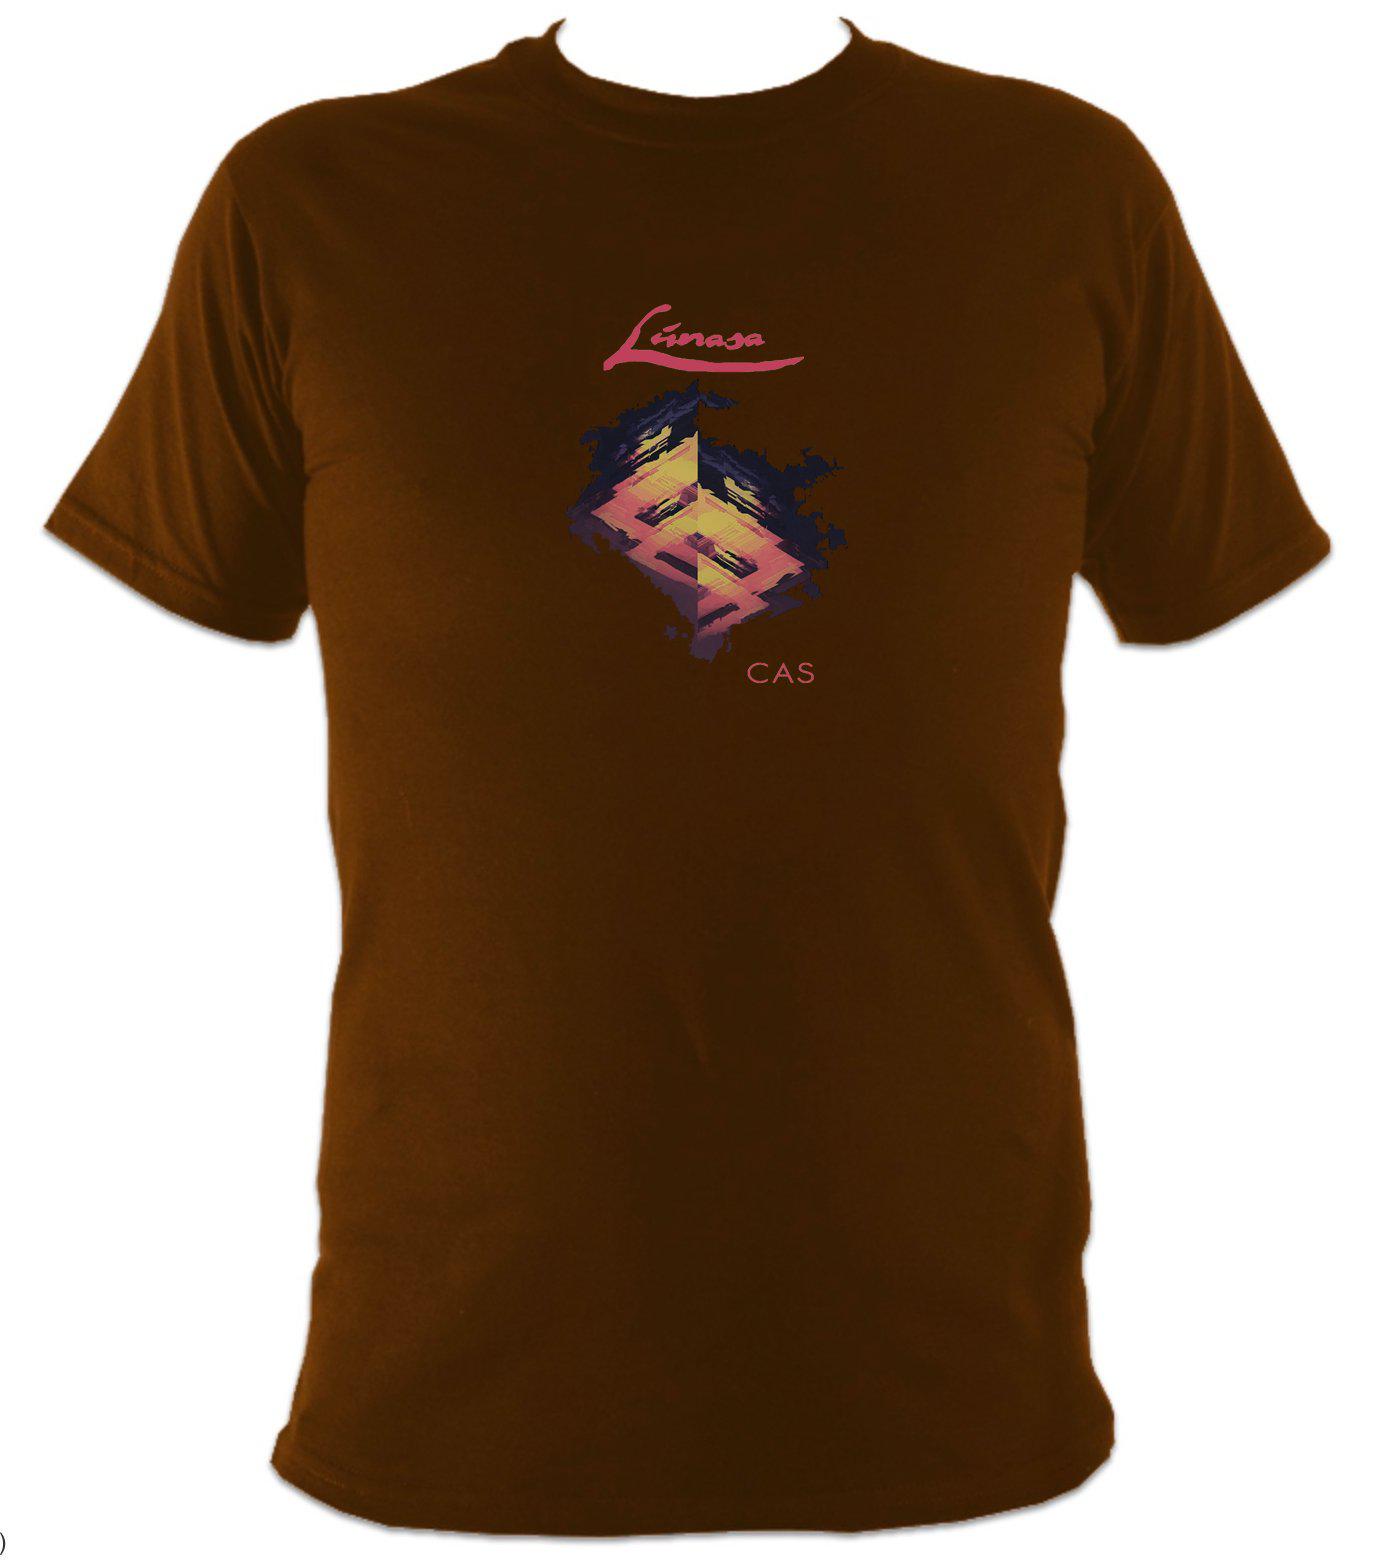 Lúnasa "Cas" T-shirt - T-shirt - Dark Chocolate - Mudchutney